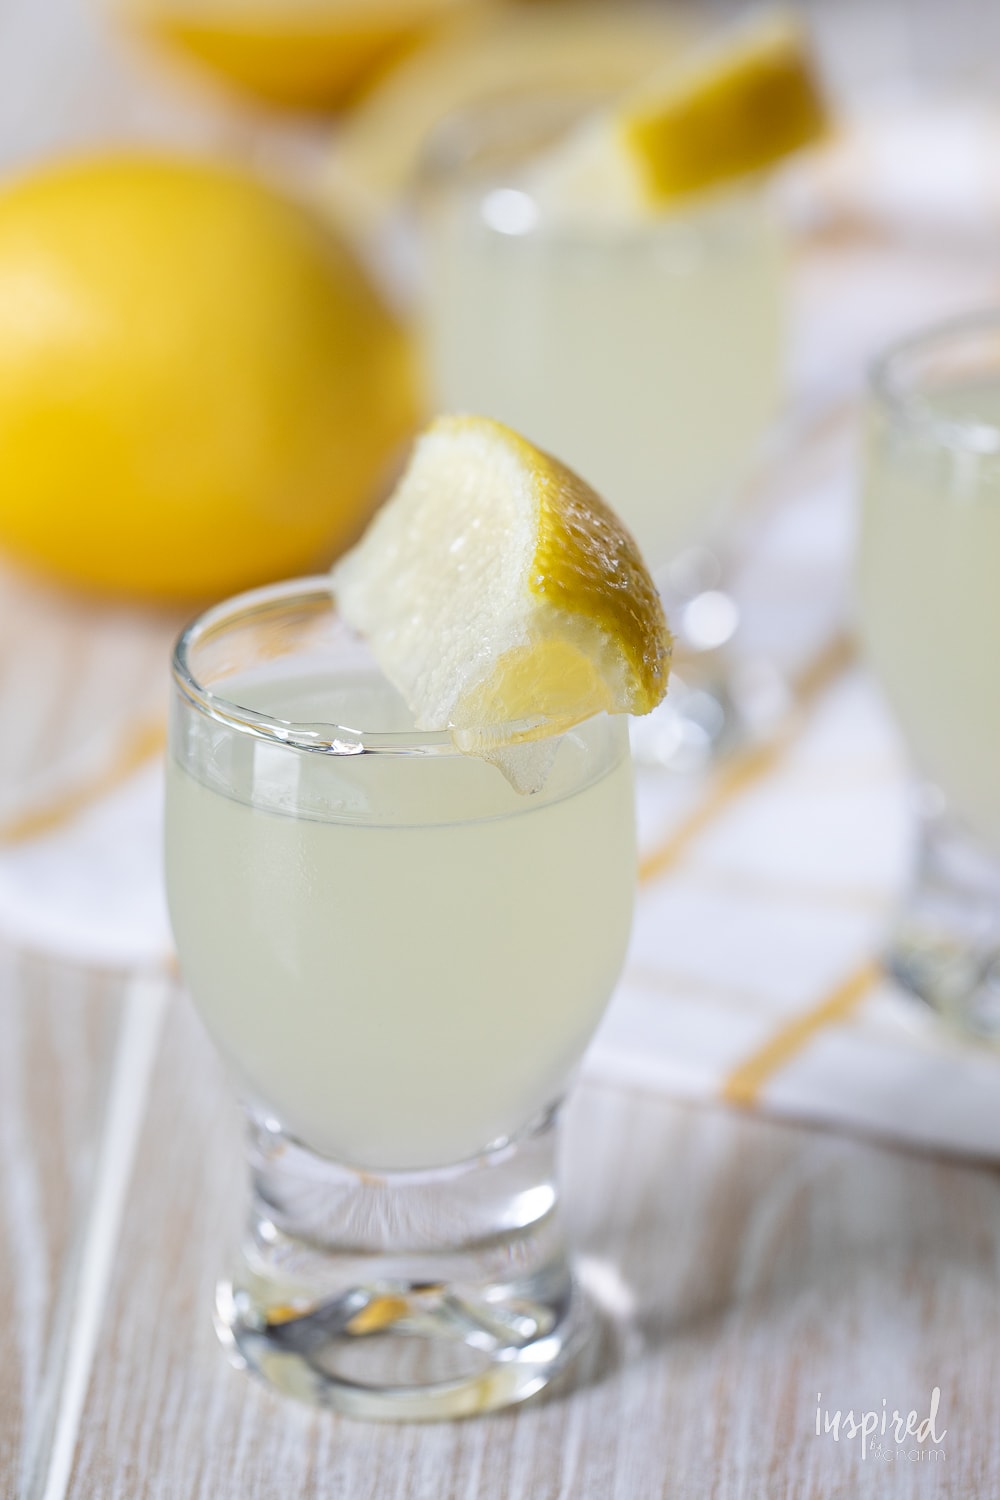 lemon drop shot in glass with lemon slice garnish.